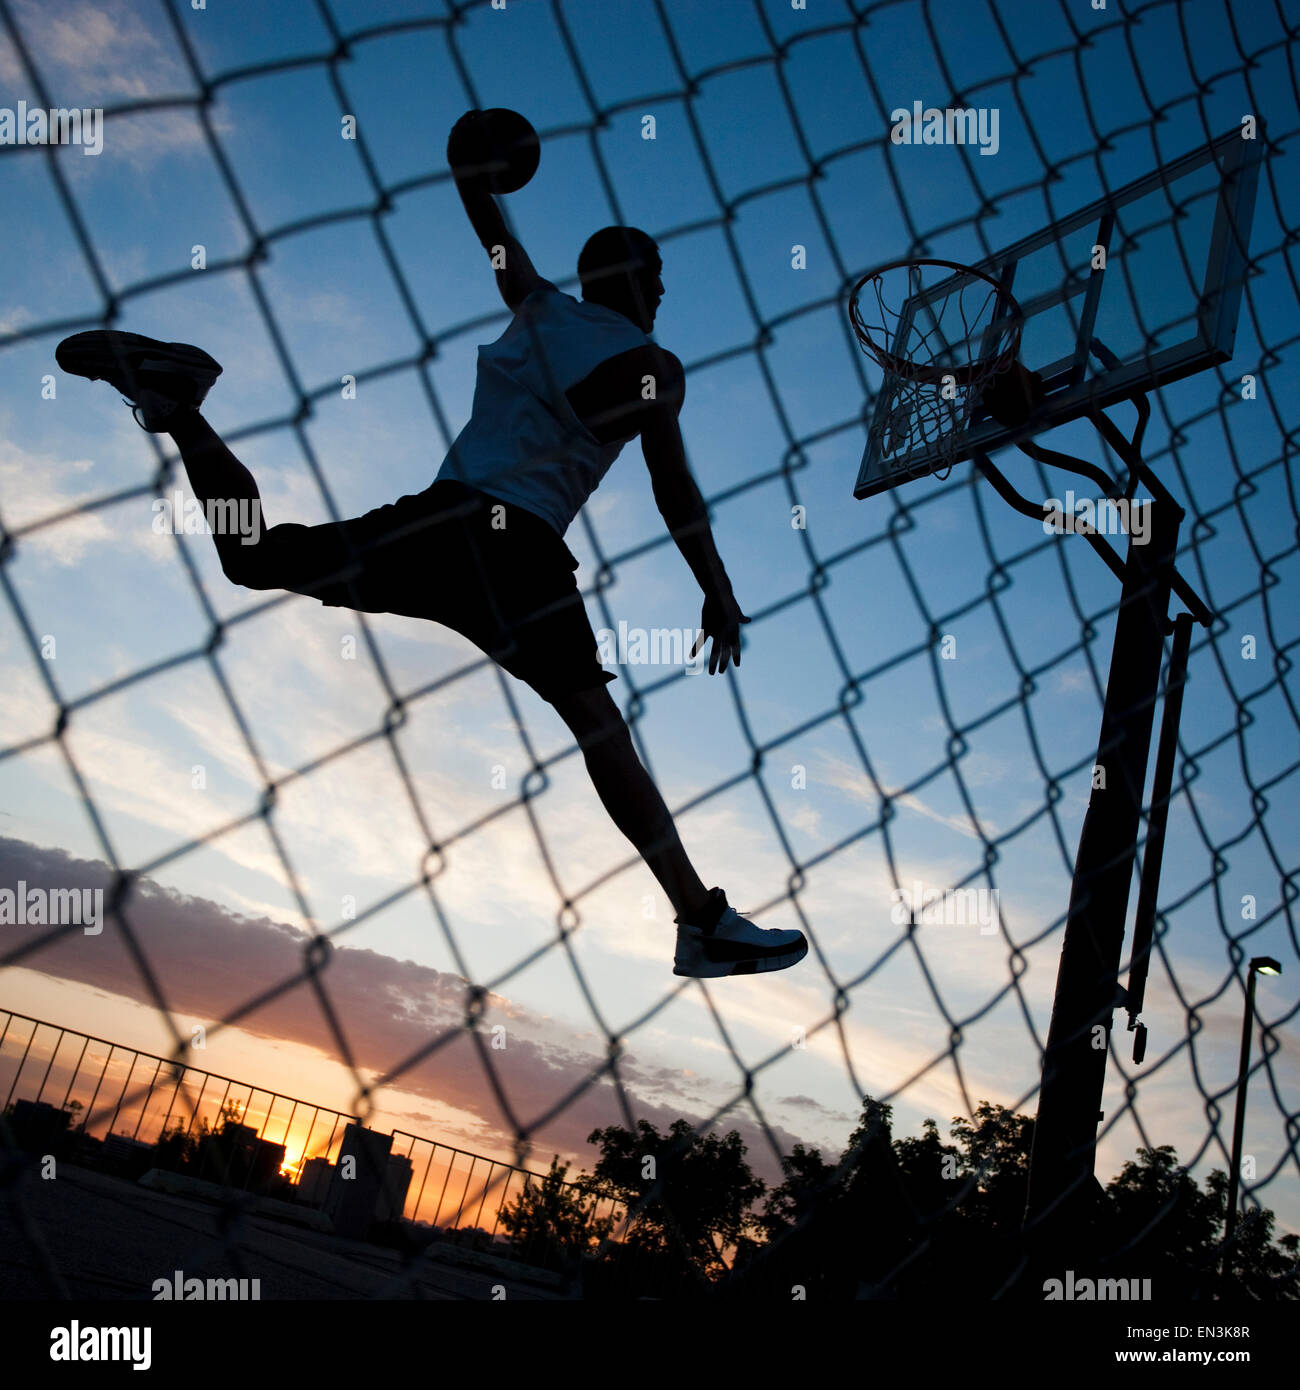 USA,Utah,Salt Lake City,Basketball player slam dunking ball Stock Photo